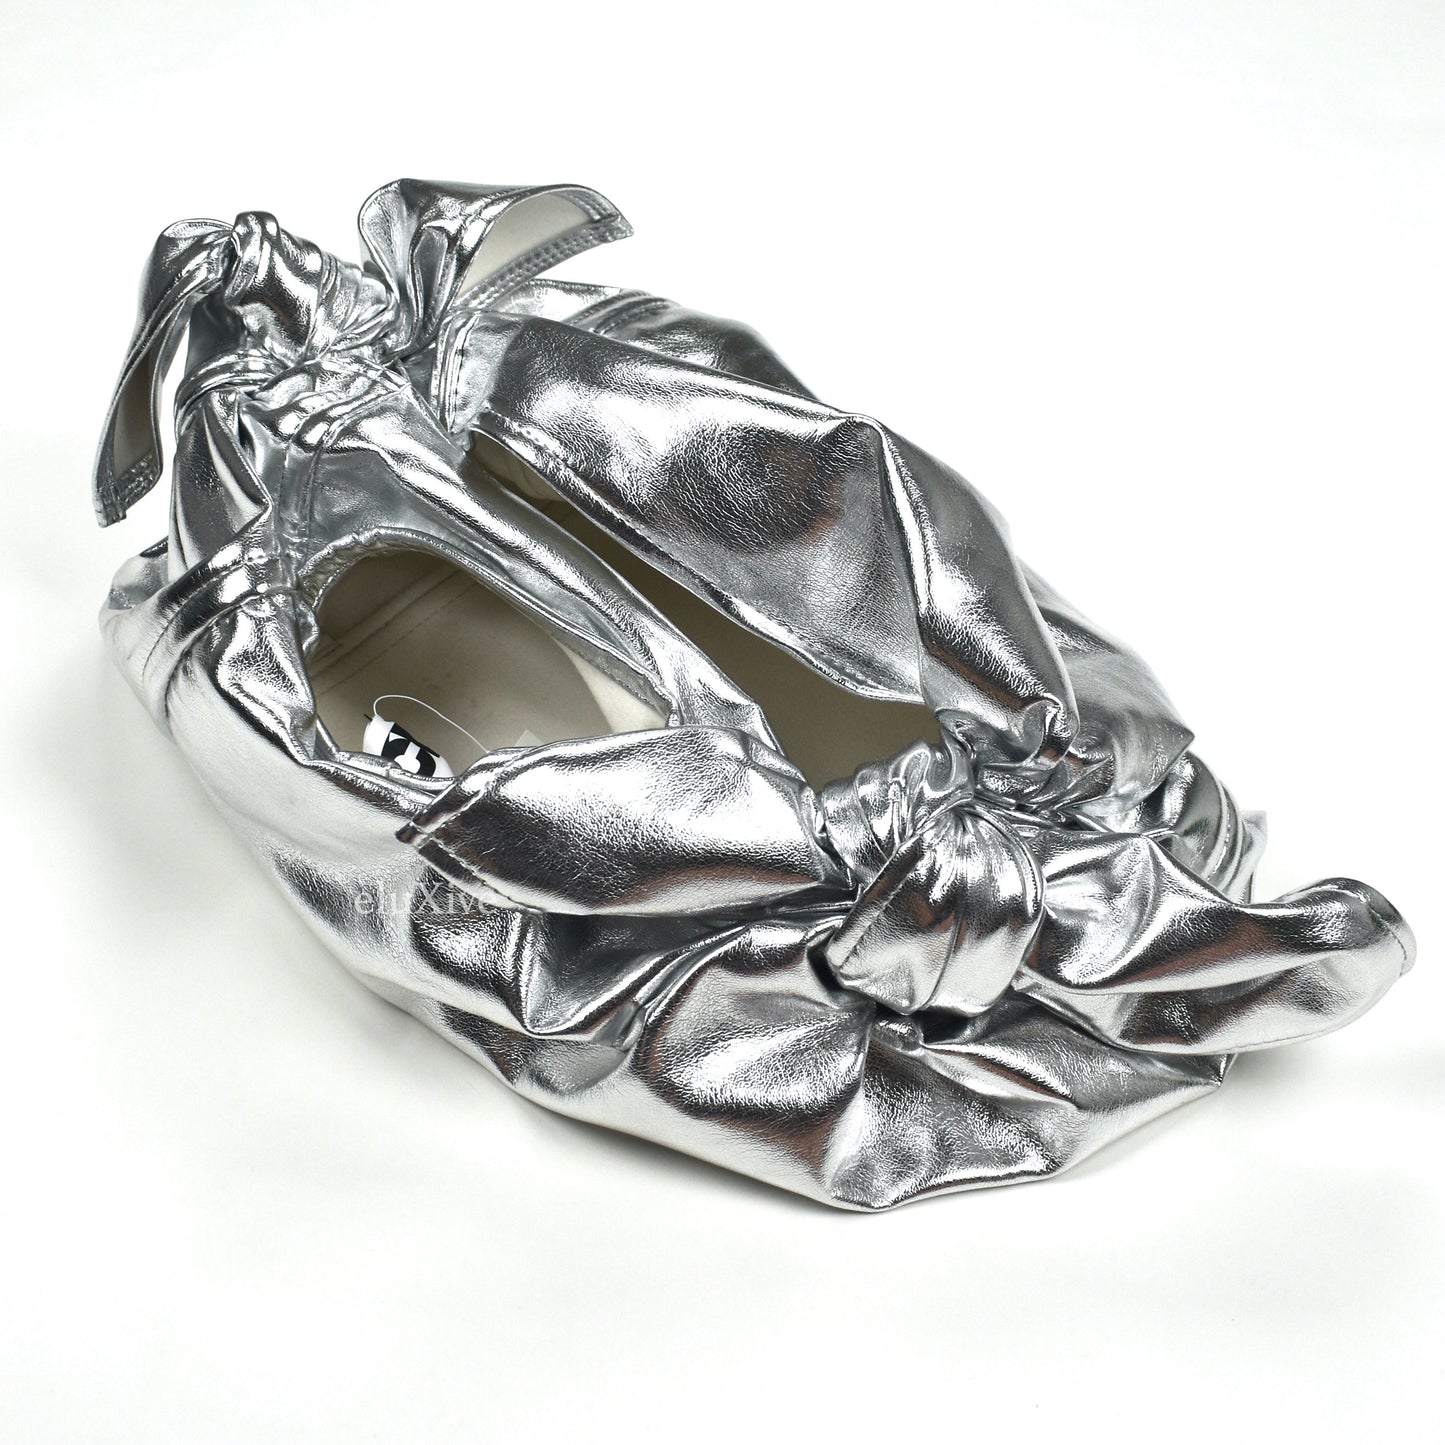 Comme des Garcons - Metallic Silver Candy Wrapper Bag